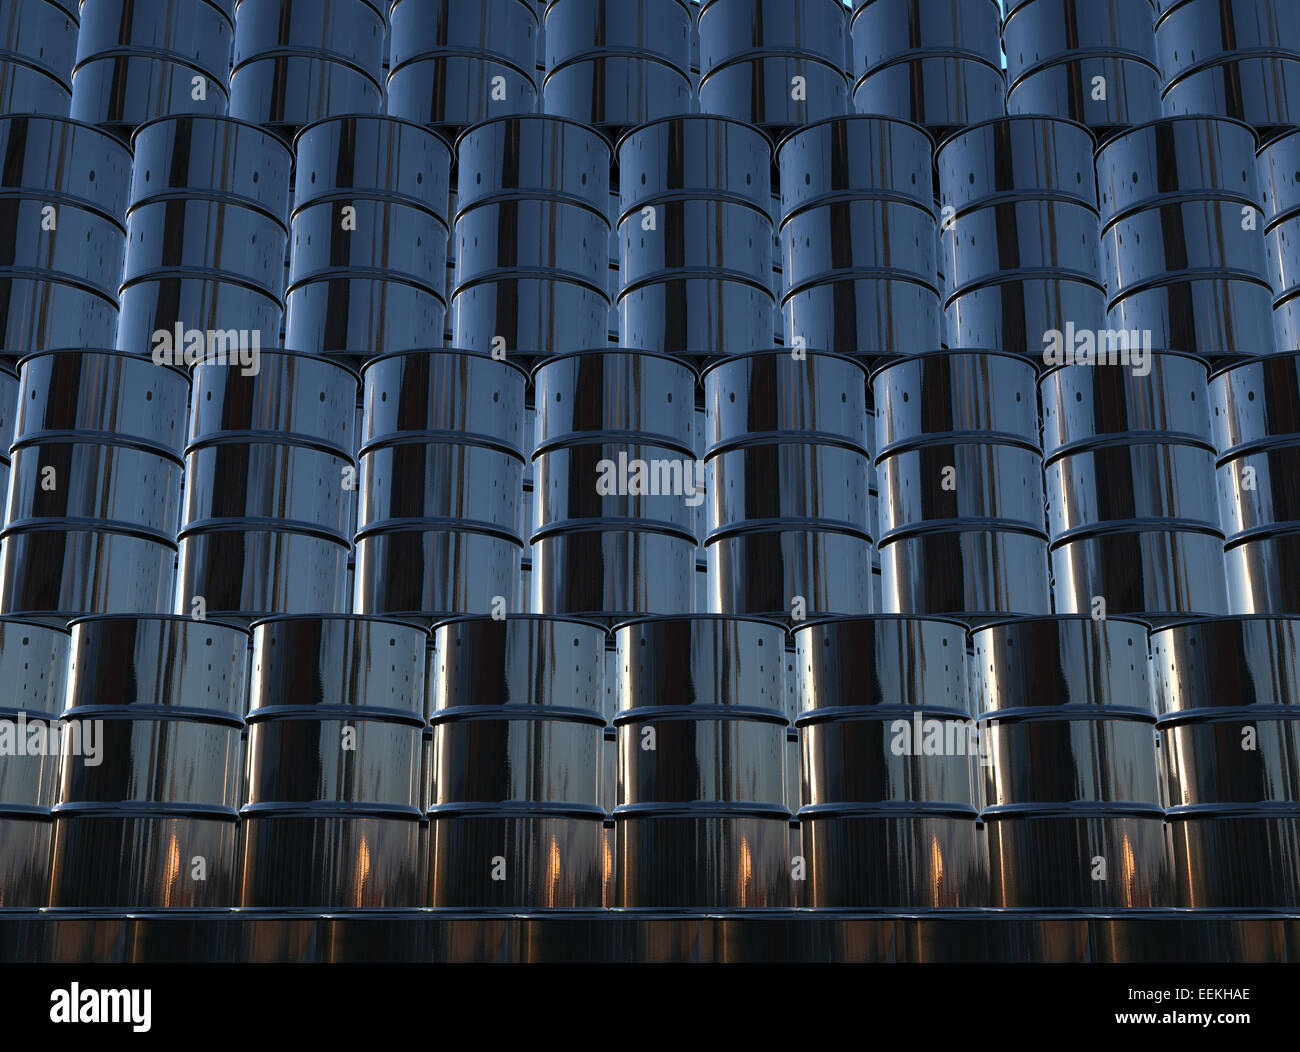 3d render of black oil barrels wall Stock Photo